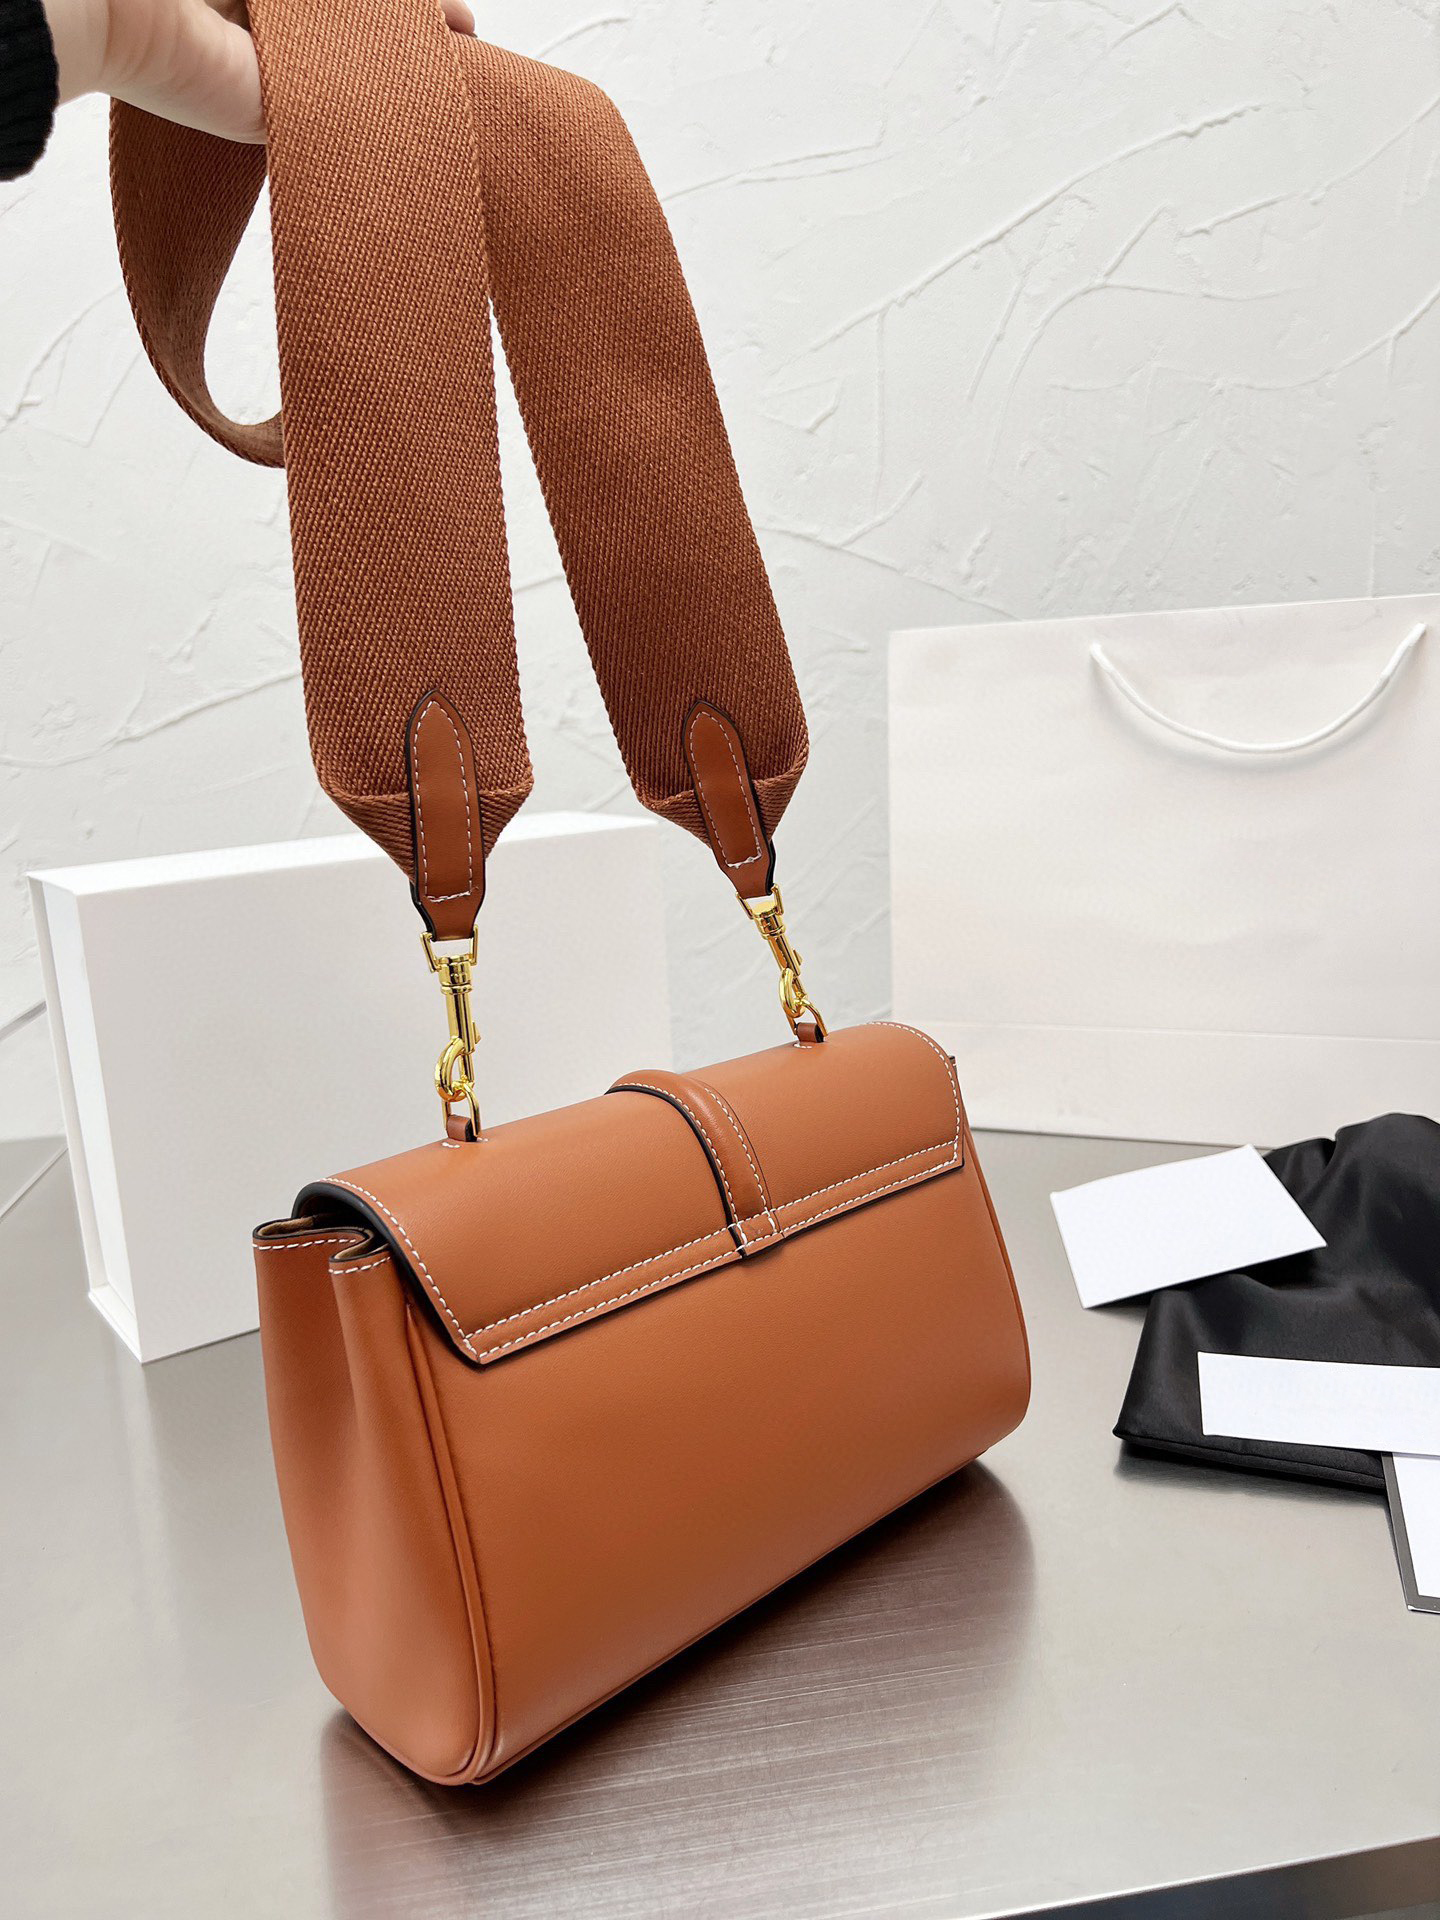 Fashion designer Handbags Backpack Purse Soft leathers material Cover women ladies Shoulder handbag totes wallet purses top Luxury Bags